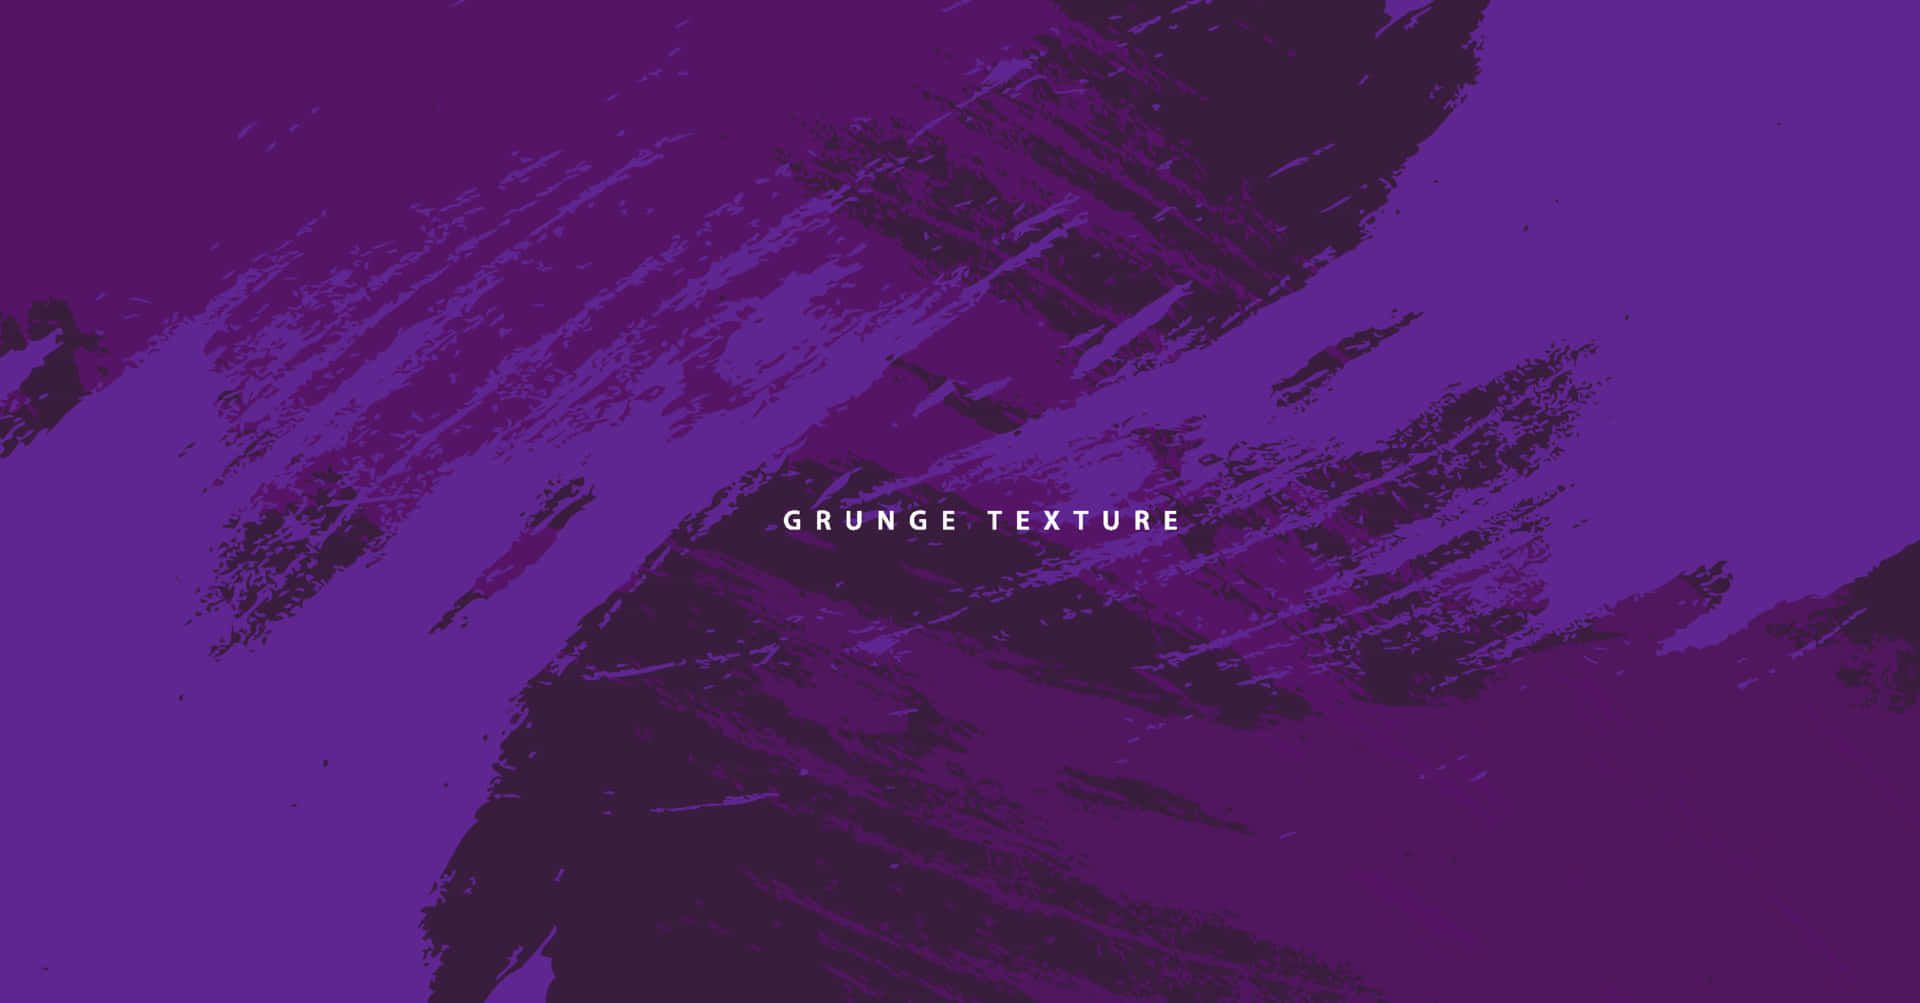 Free Purple Grunge Aesthetic Wallpaper Downloads, Purple Grunge Aesthetic Wallpaper for FREE